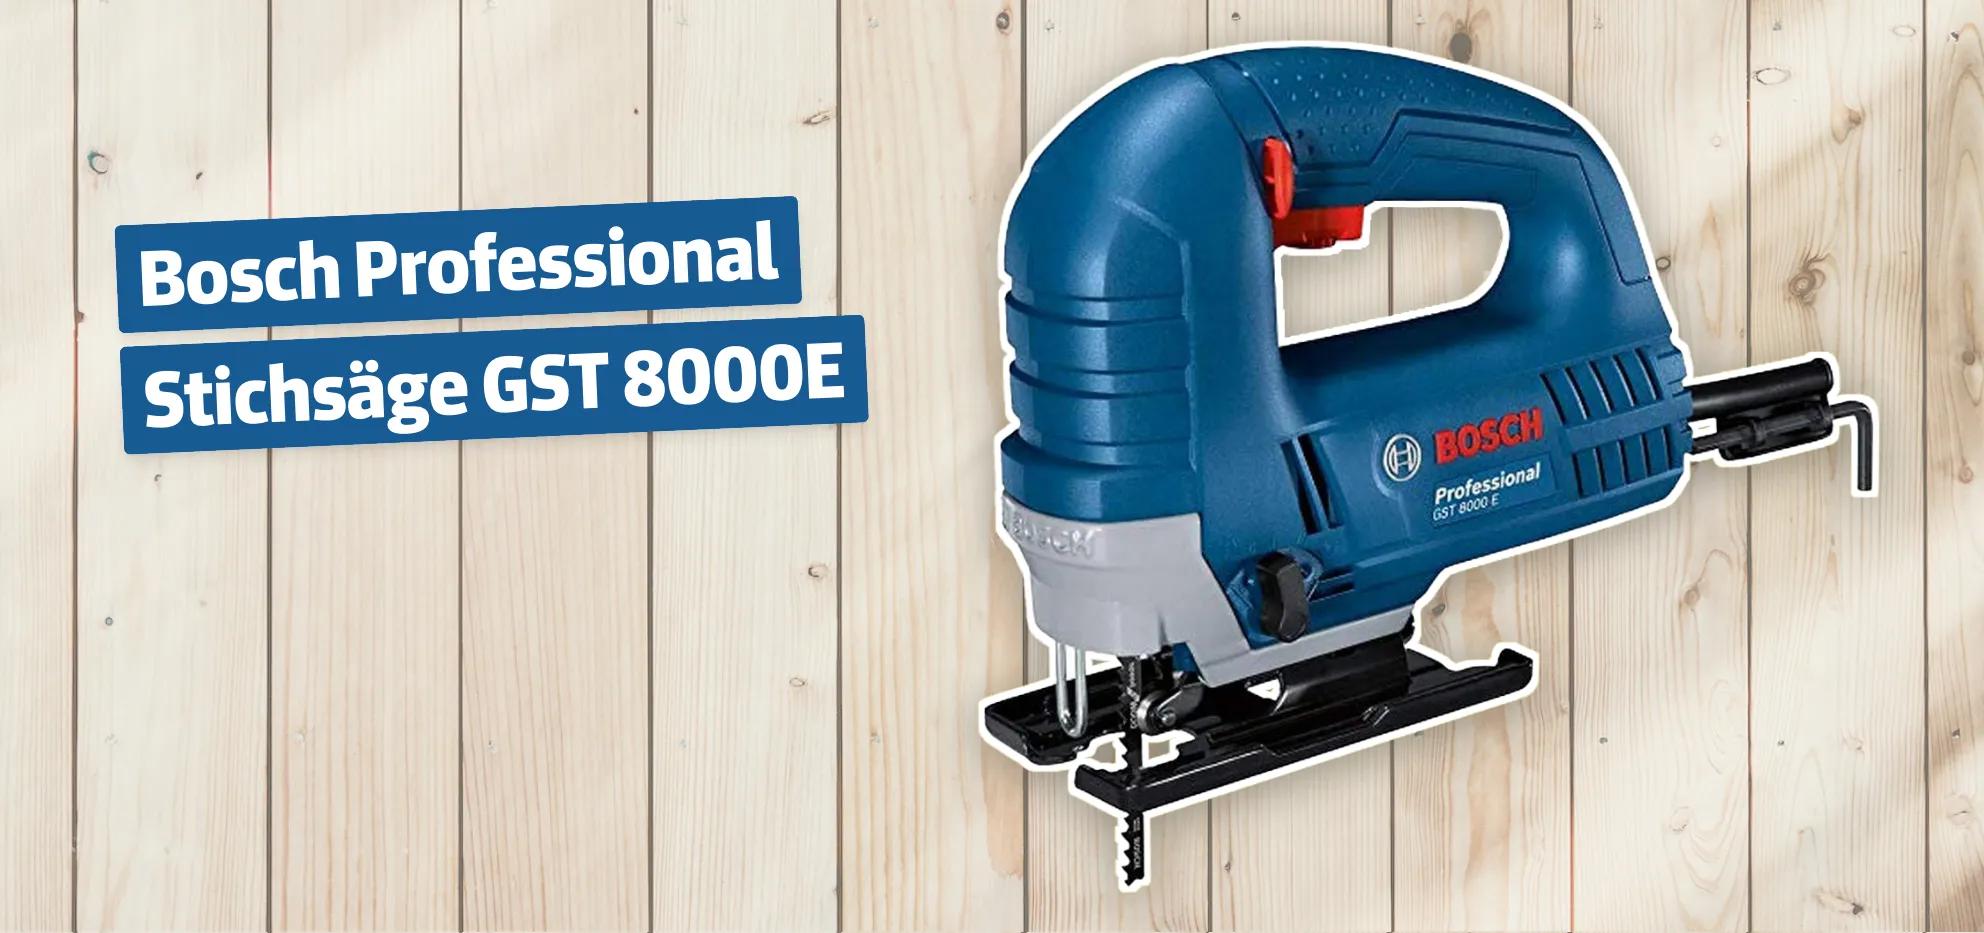 Bosch Professional Stichsäge GST 8000E